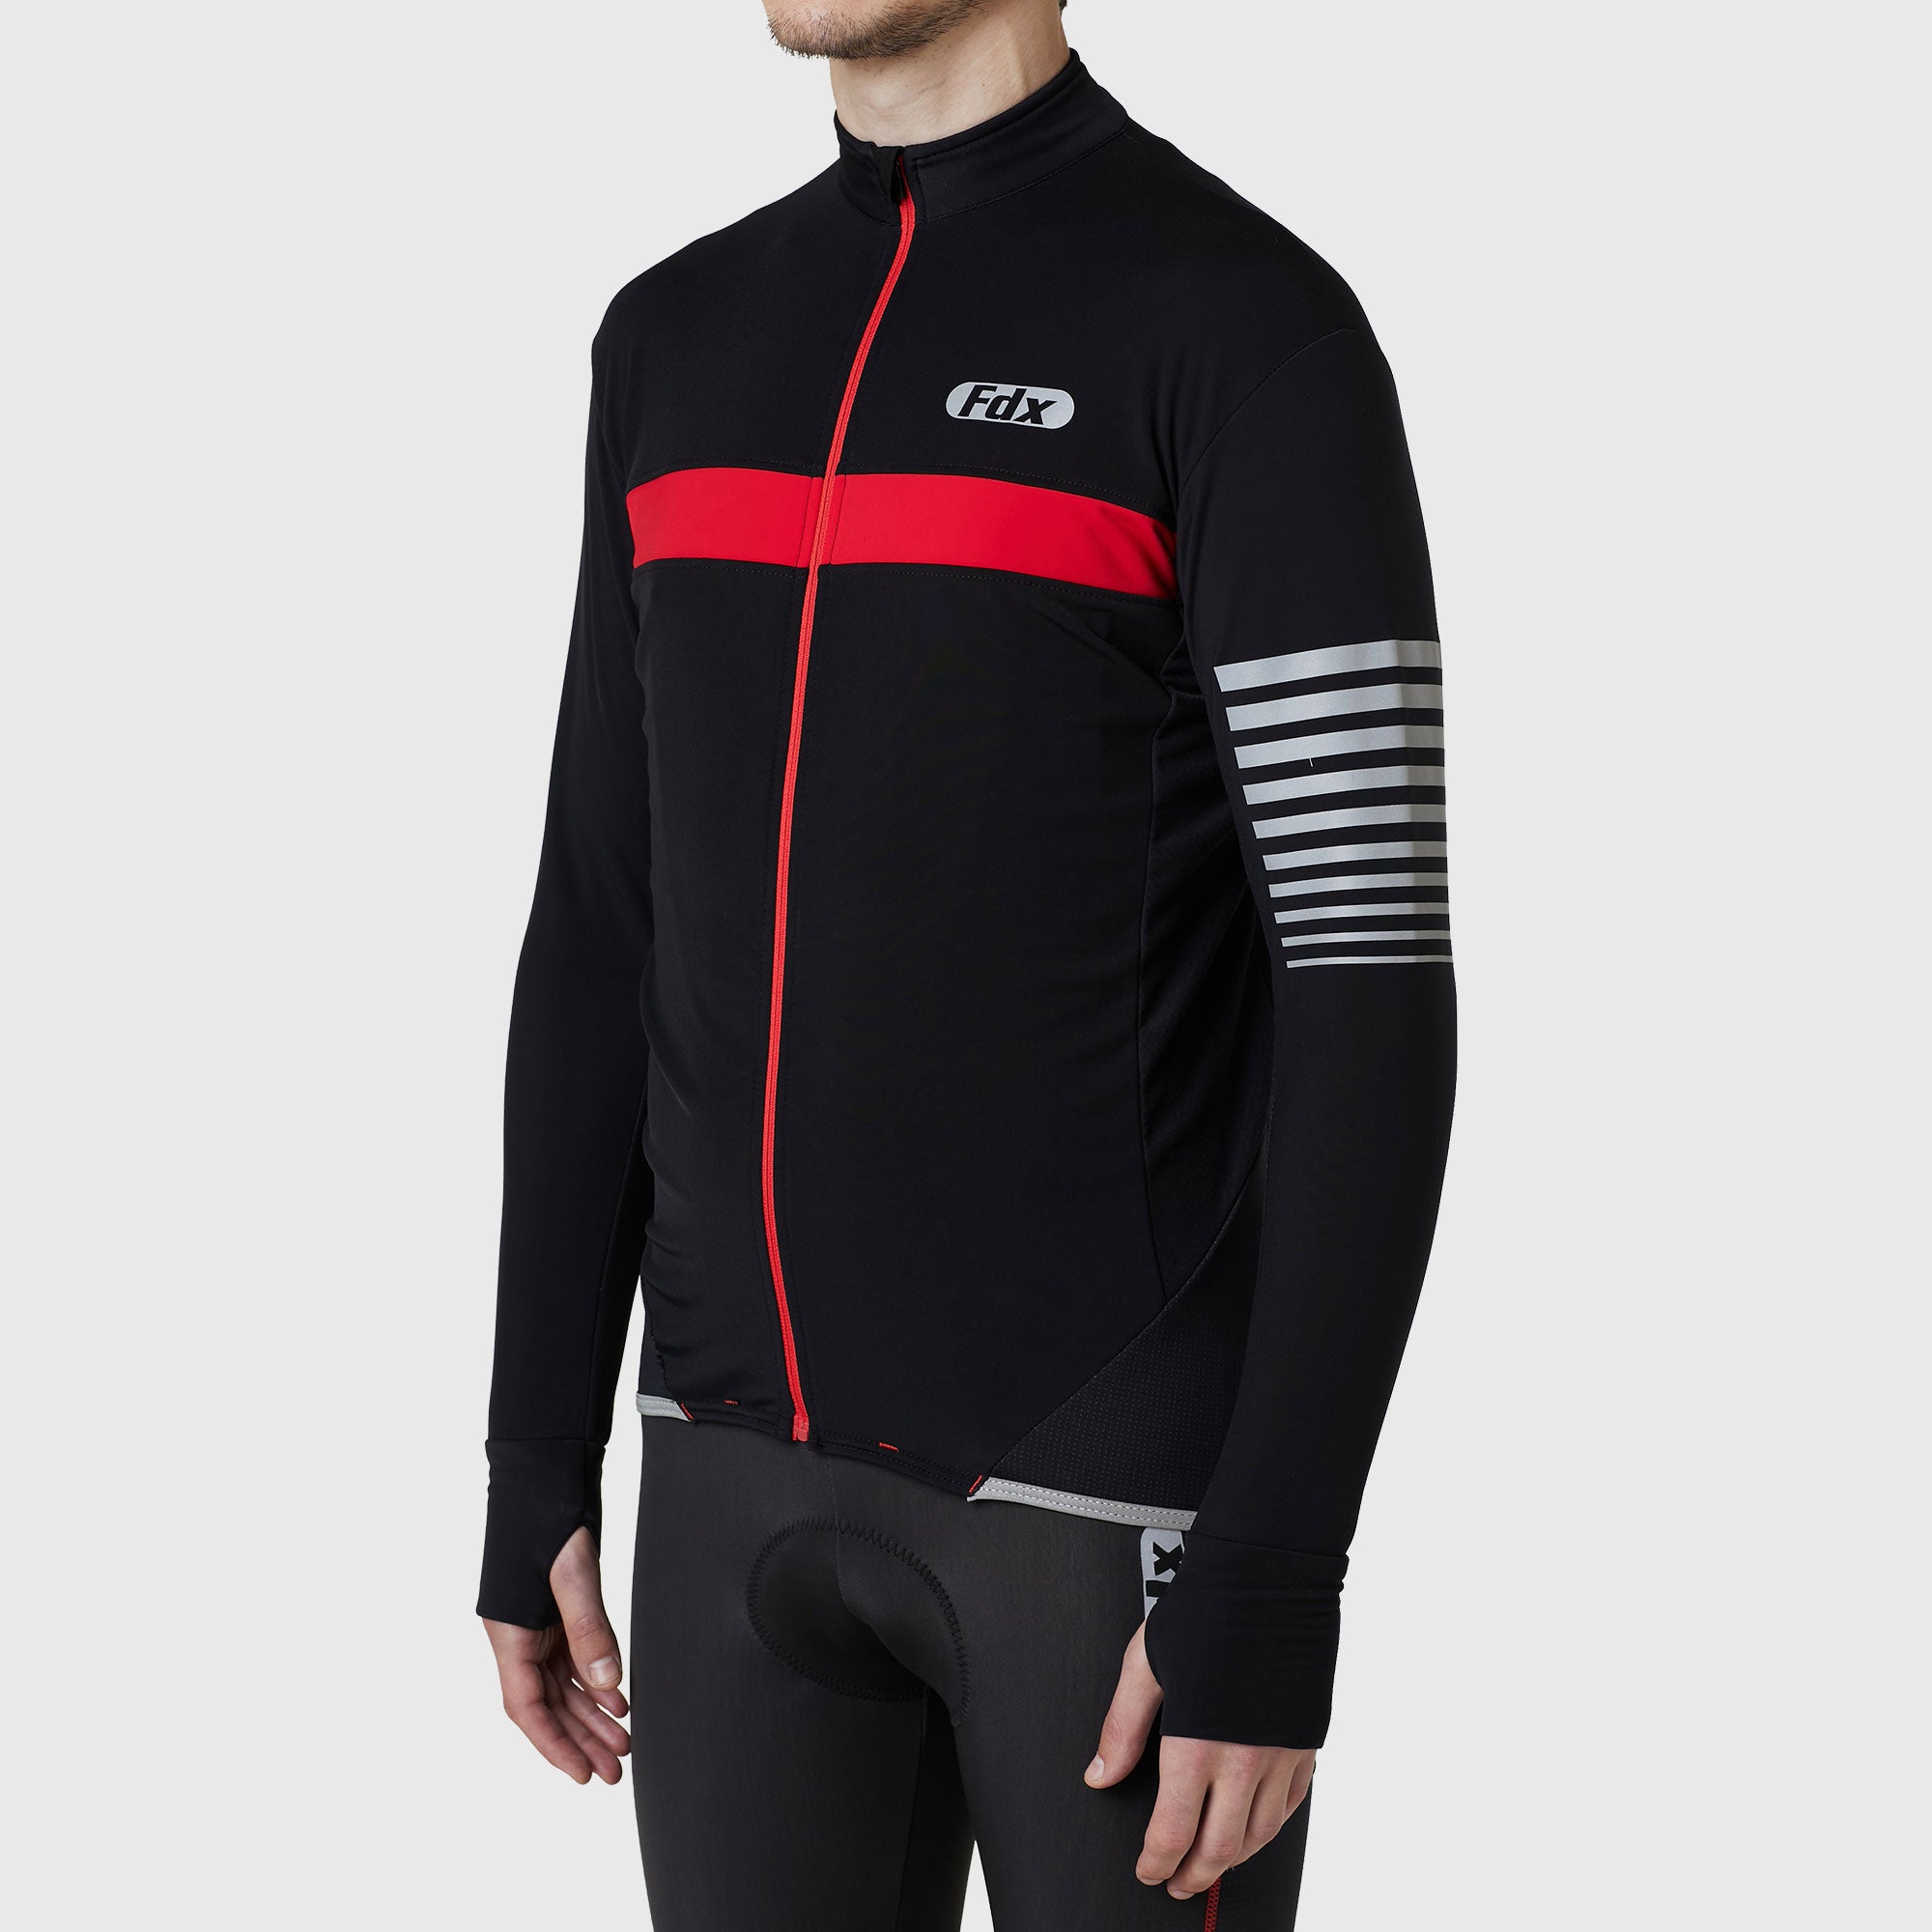 Fdx Mens Red Long Sleeve Cycling Jersey for Winter Roubaix Thermal Fleece Road Bike Wear Top Full Zipper, Pockets & Hi-viz Reflectors - All Day